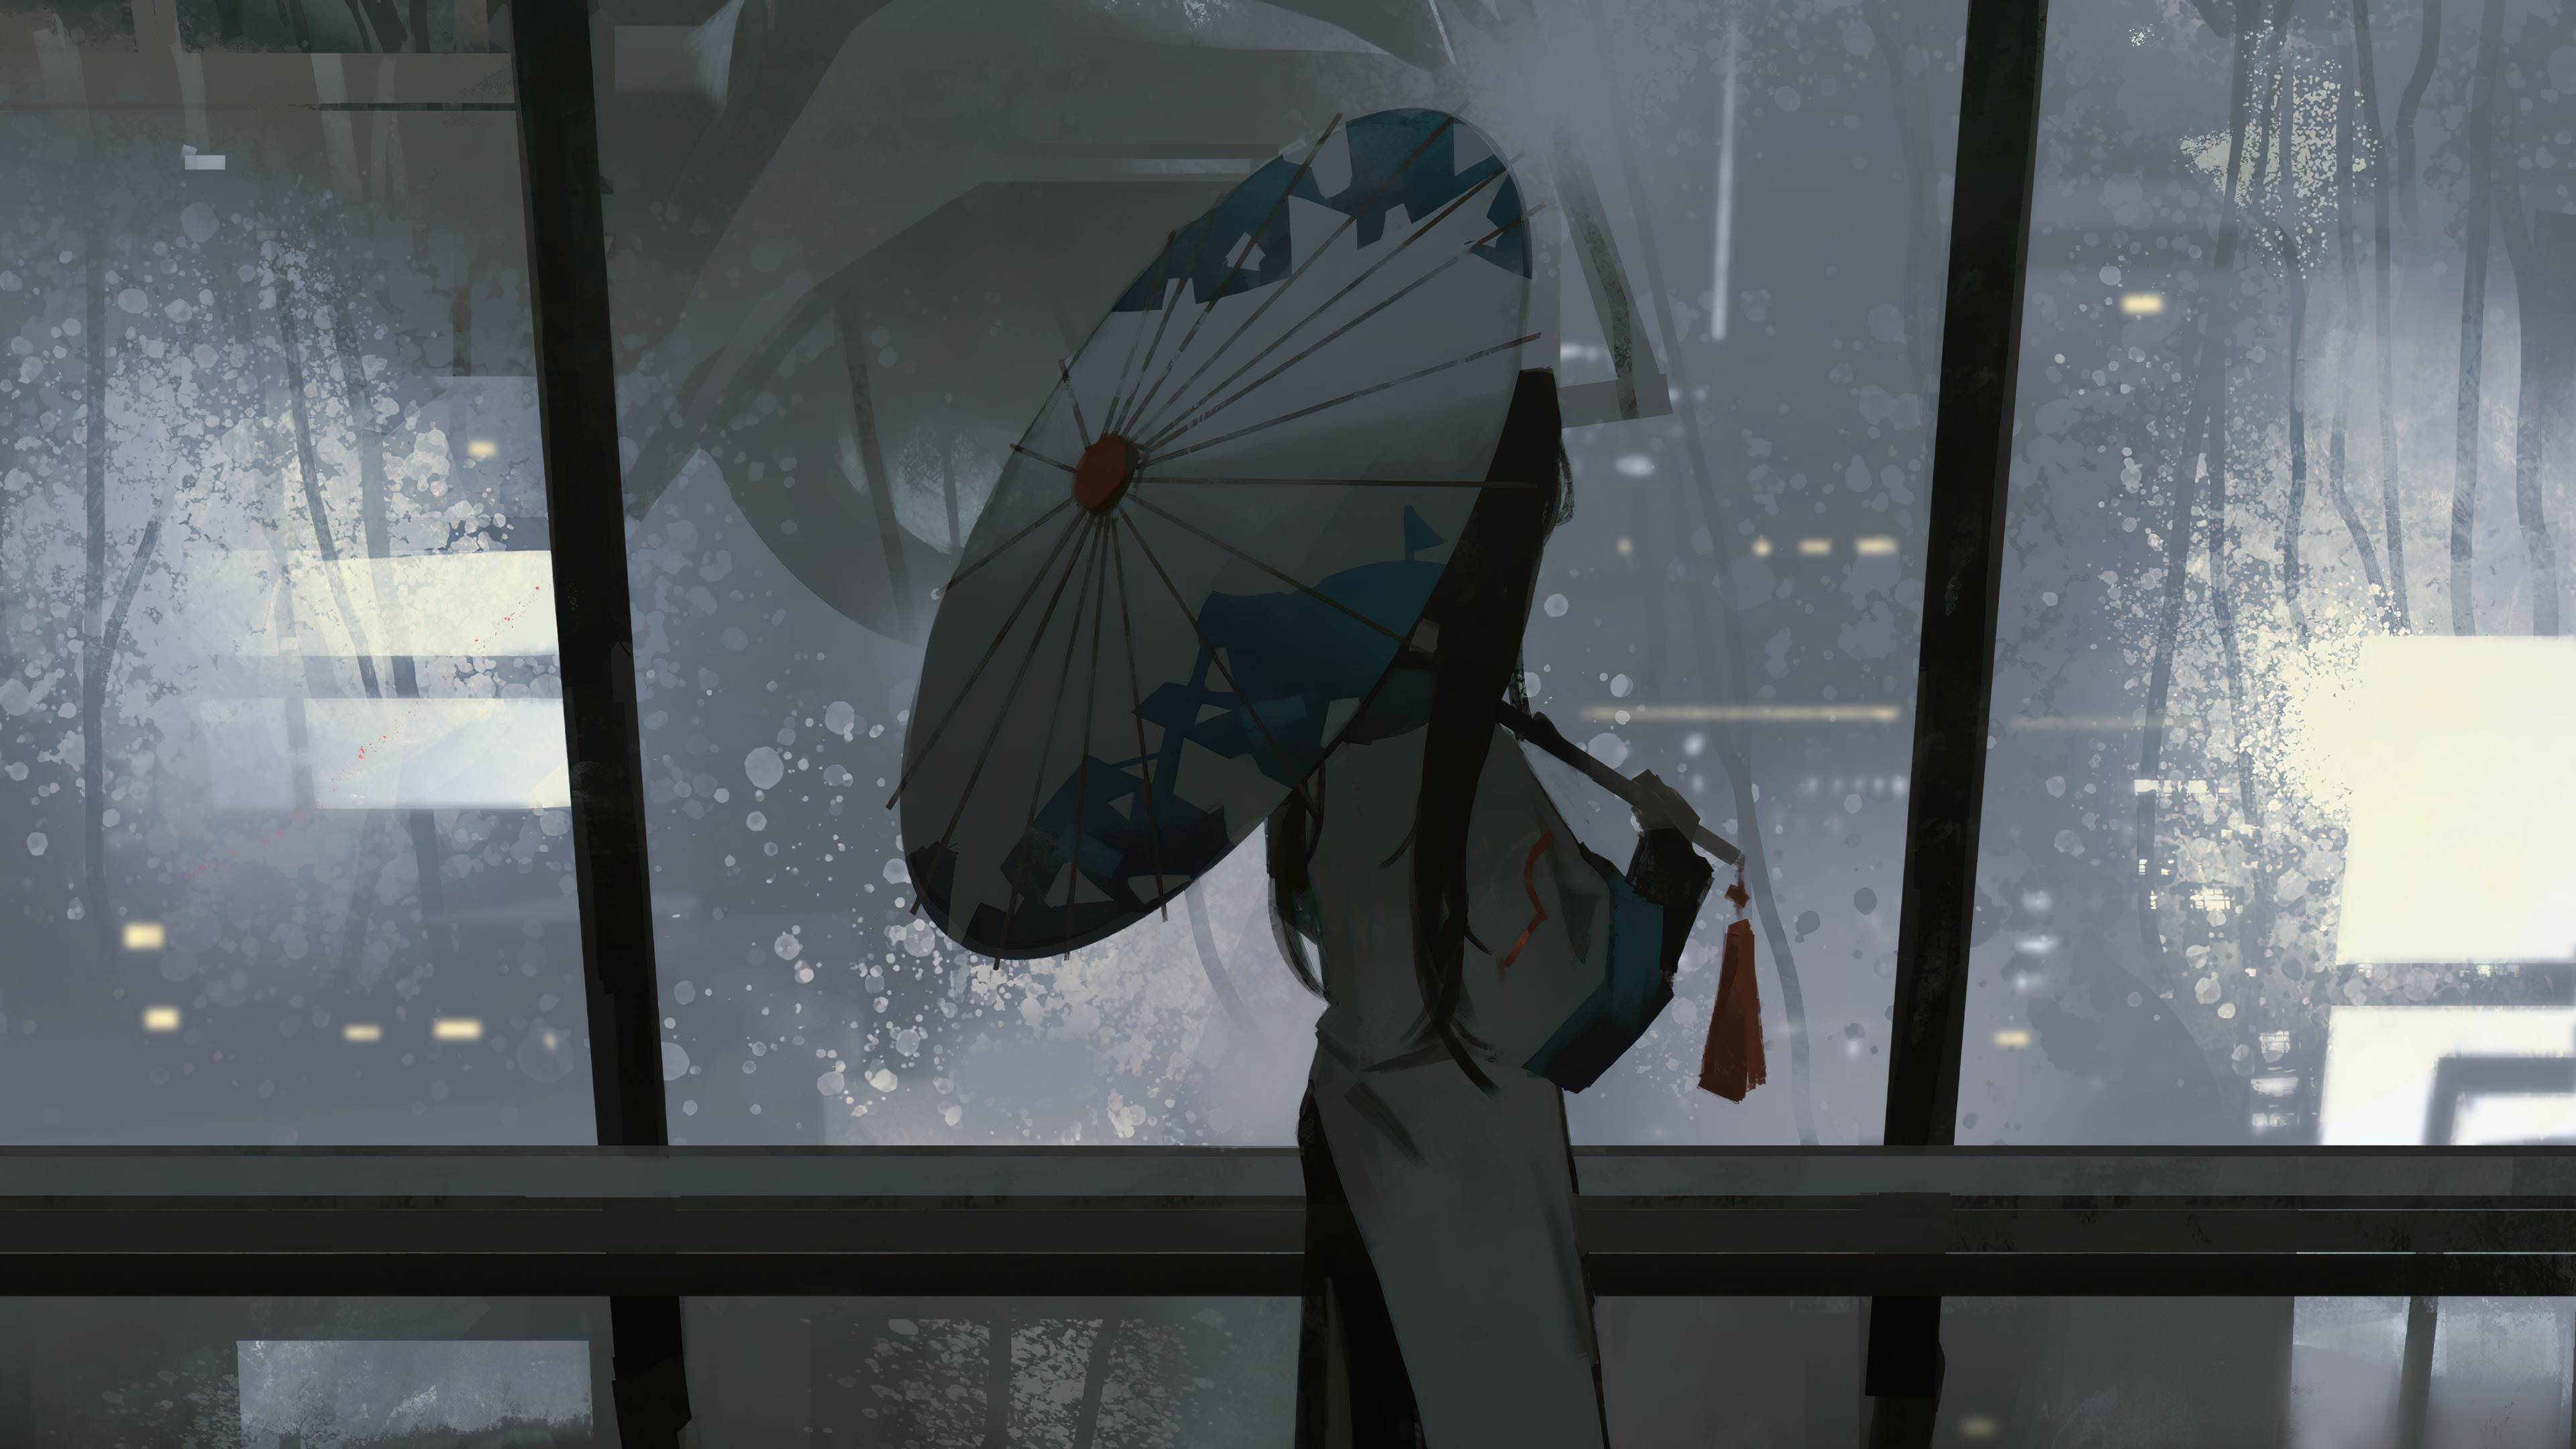 Anime Girl Dark Night Umbrella Raining 4k, HD Anime, 4k Wallpaper, Image, Background, Photo and Picture